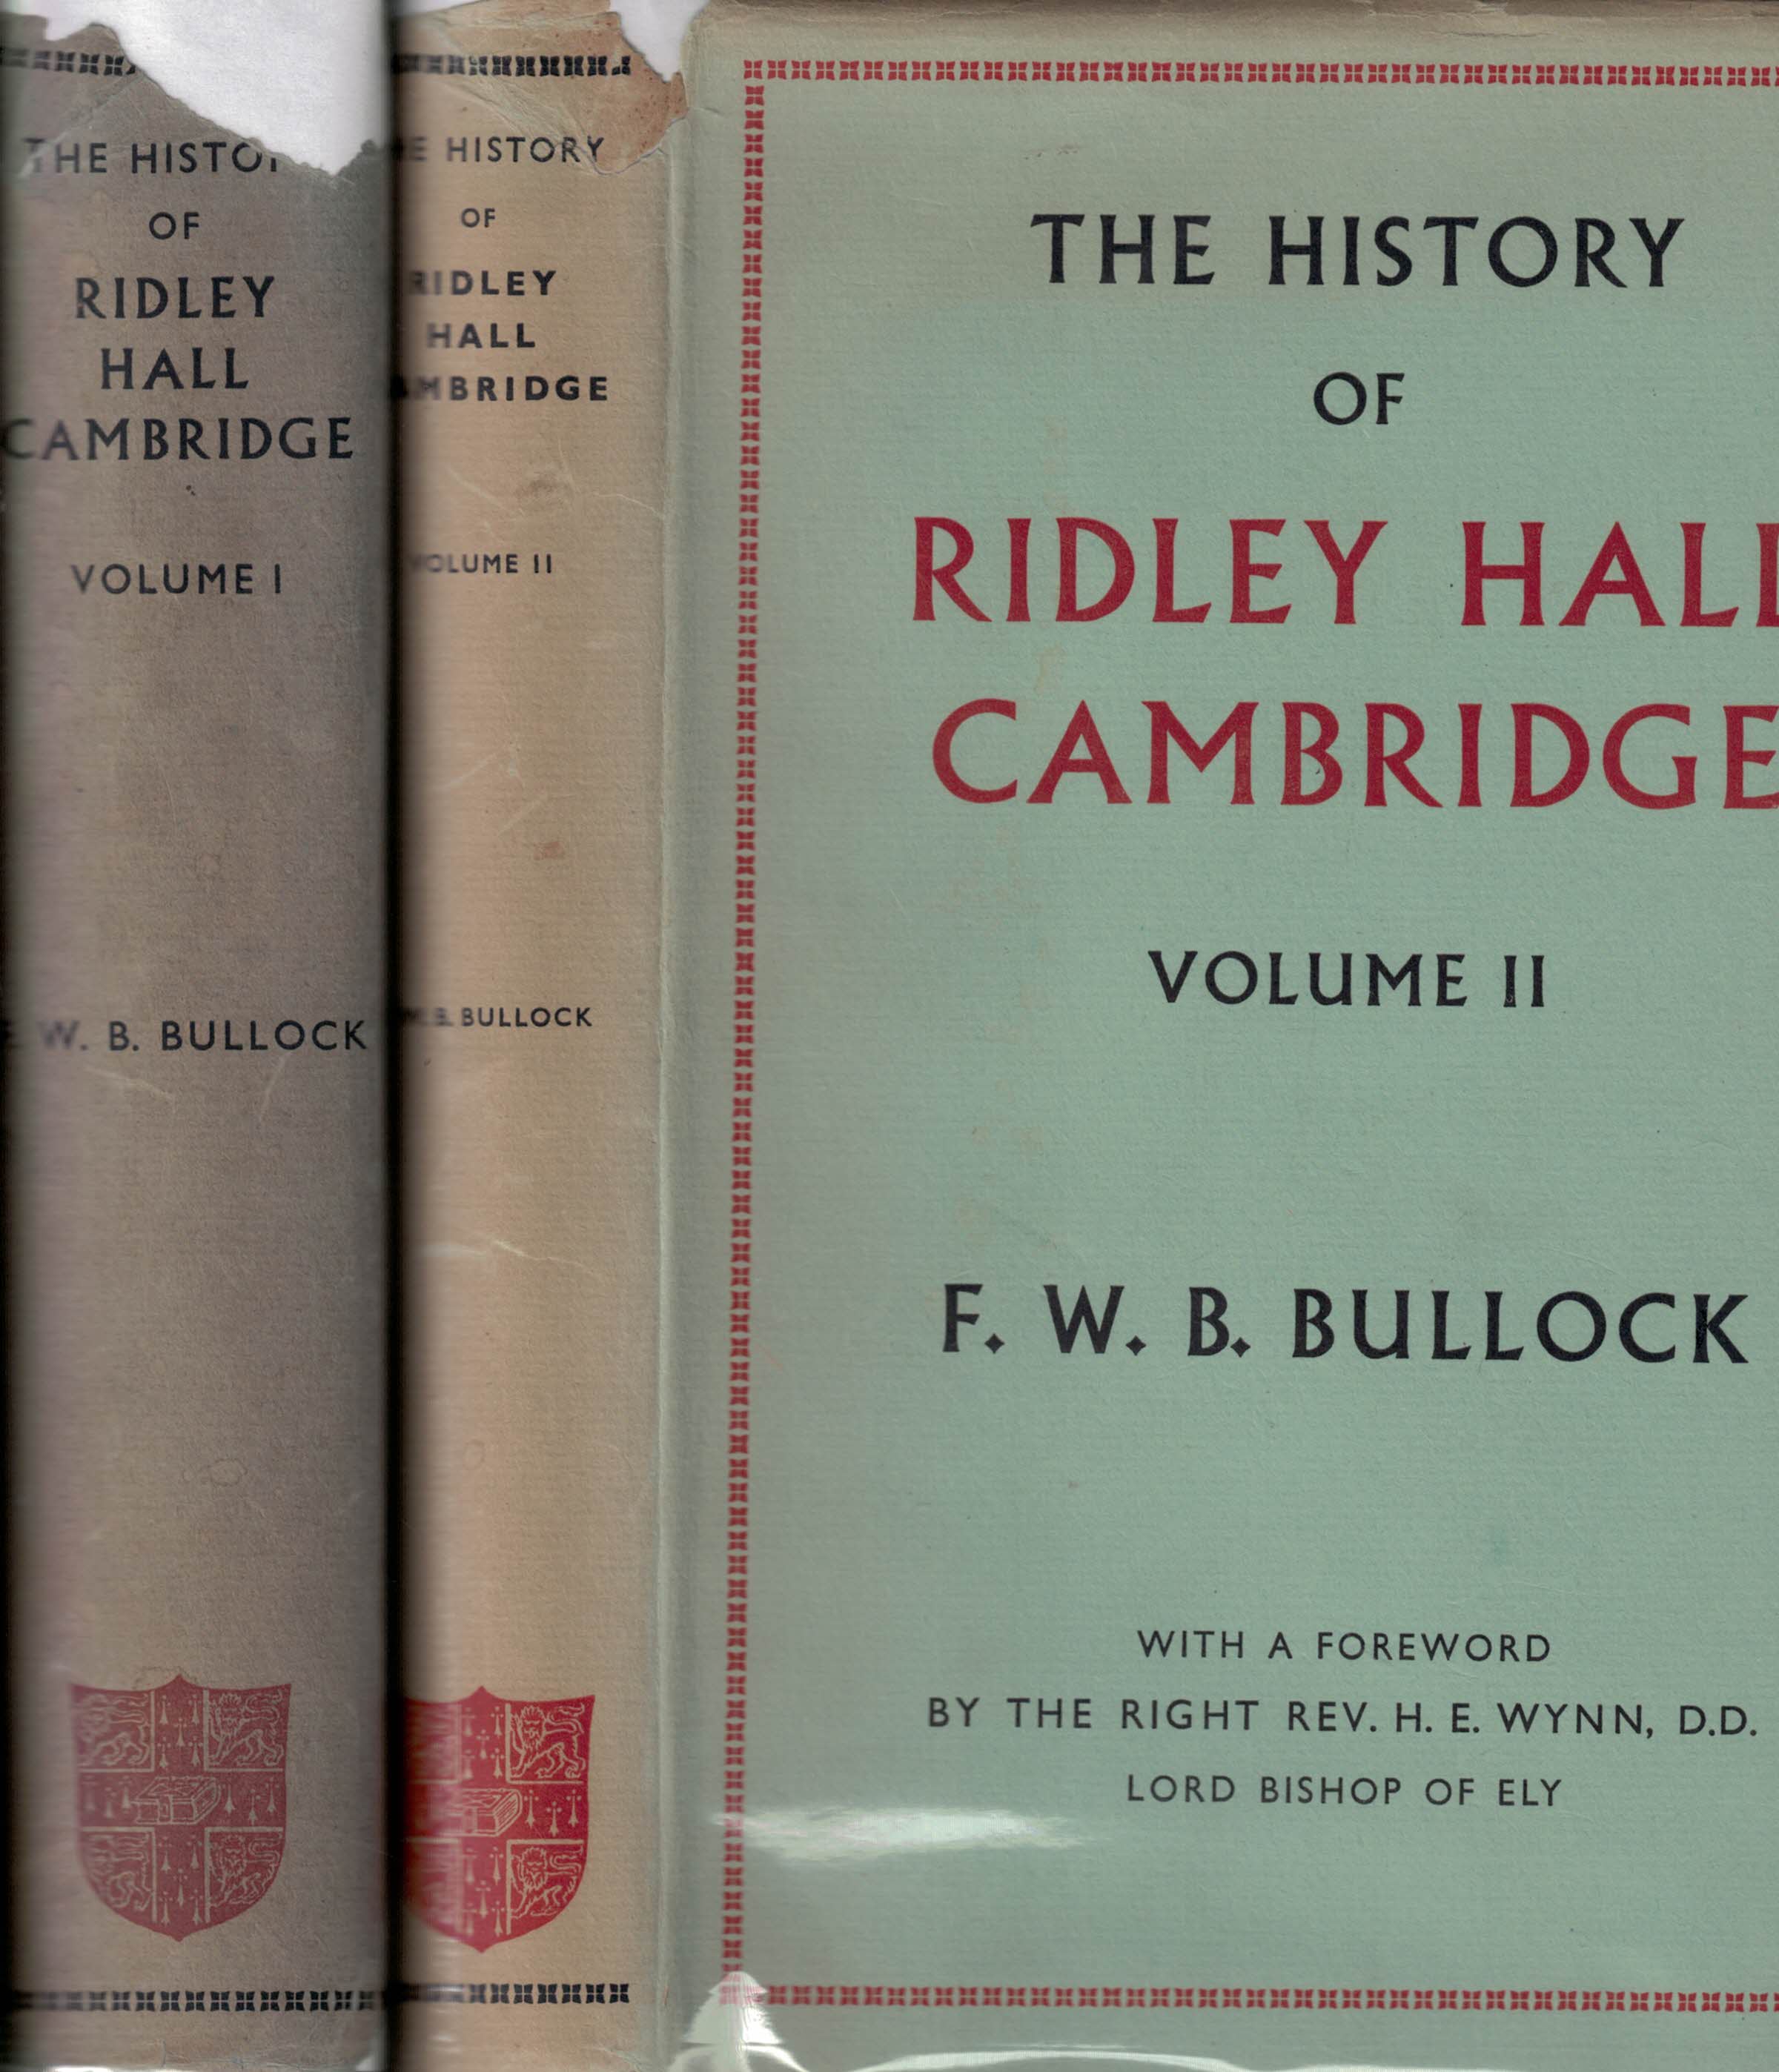 The History of Ridley Hall Cambridge. 2 volume set.